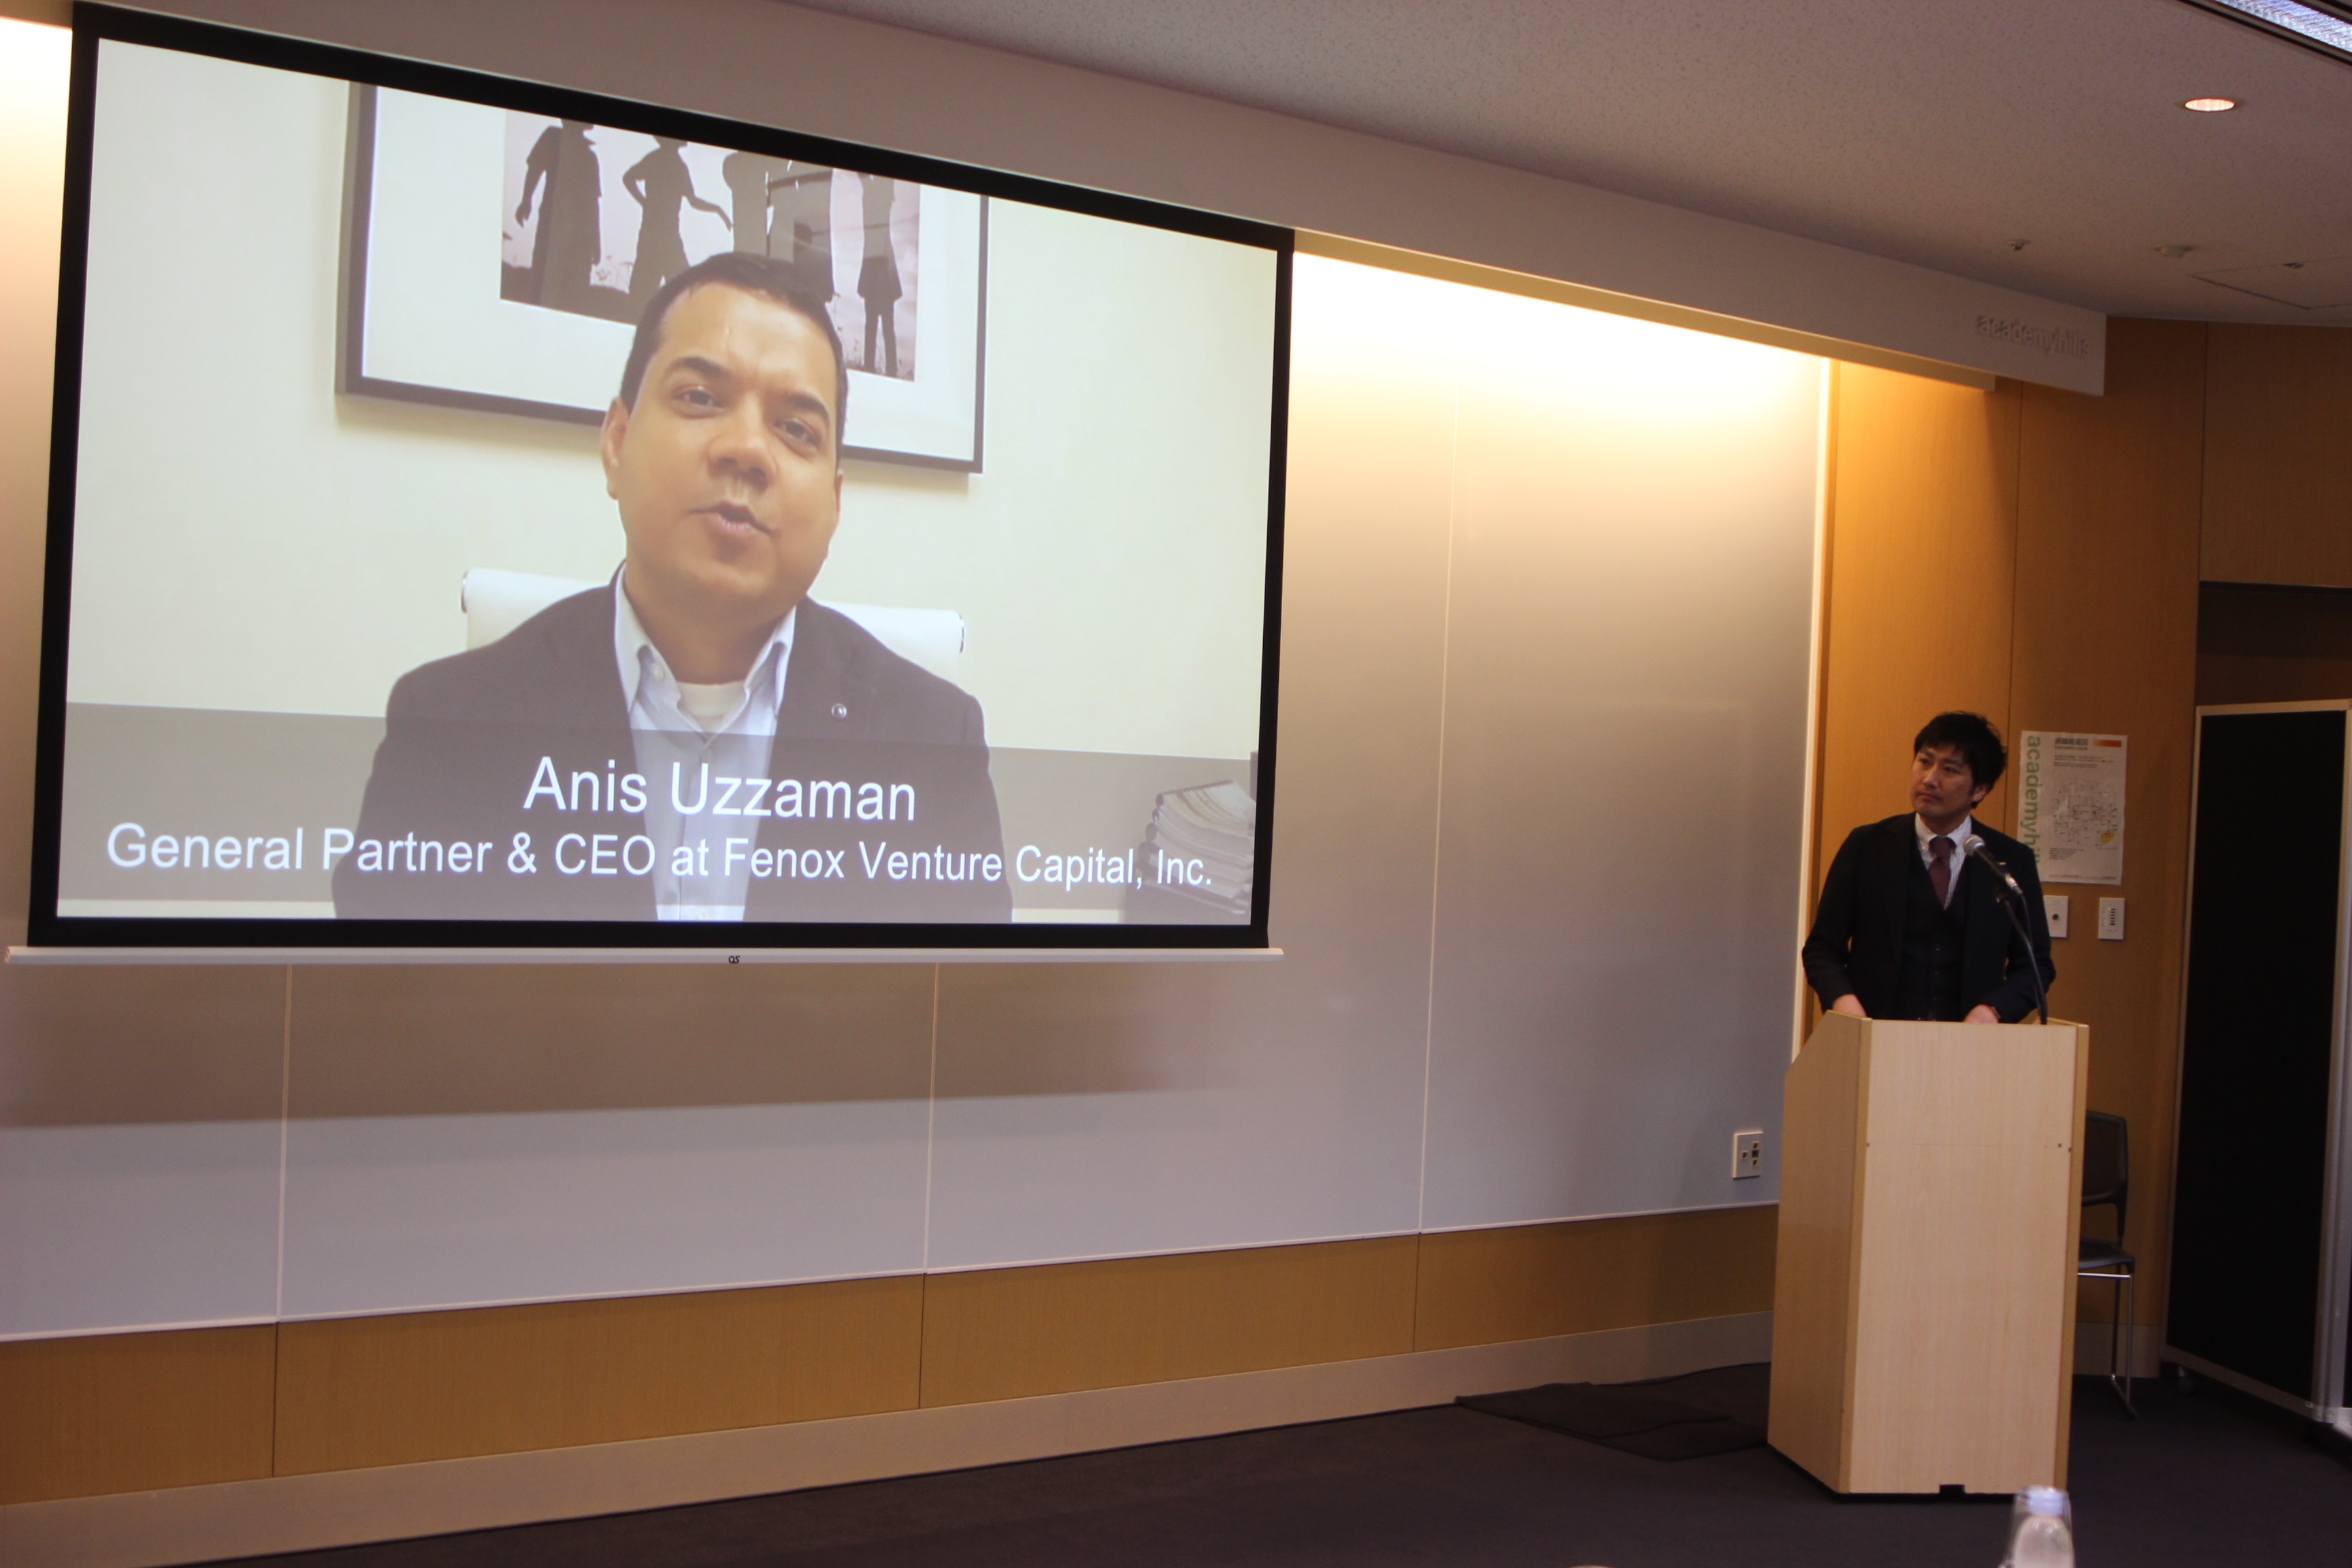 Anis Uzzaman General Partner and CEO at Fenex Venture Capital. Inc.